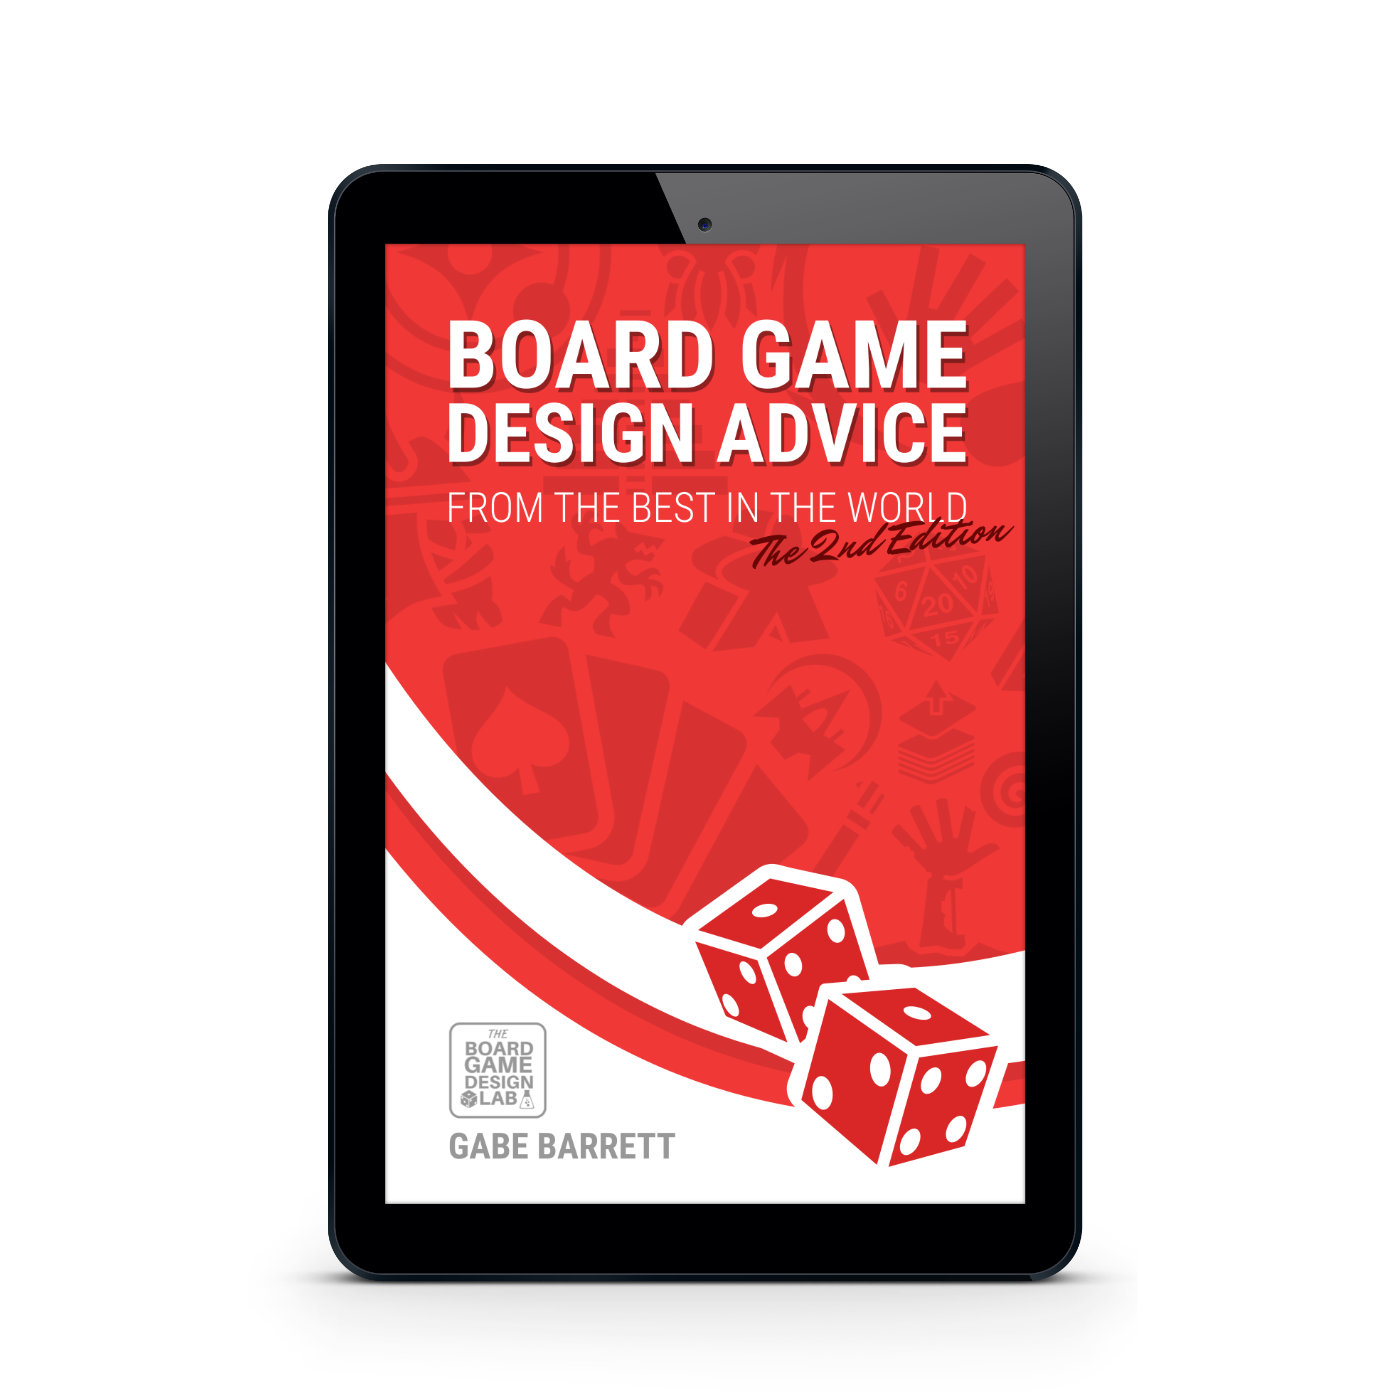 Homepage - Board Game Design Lab